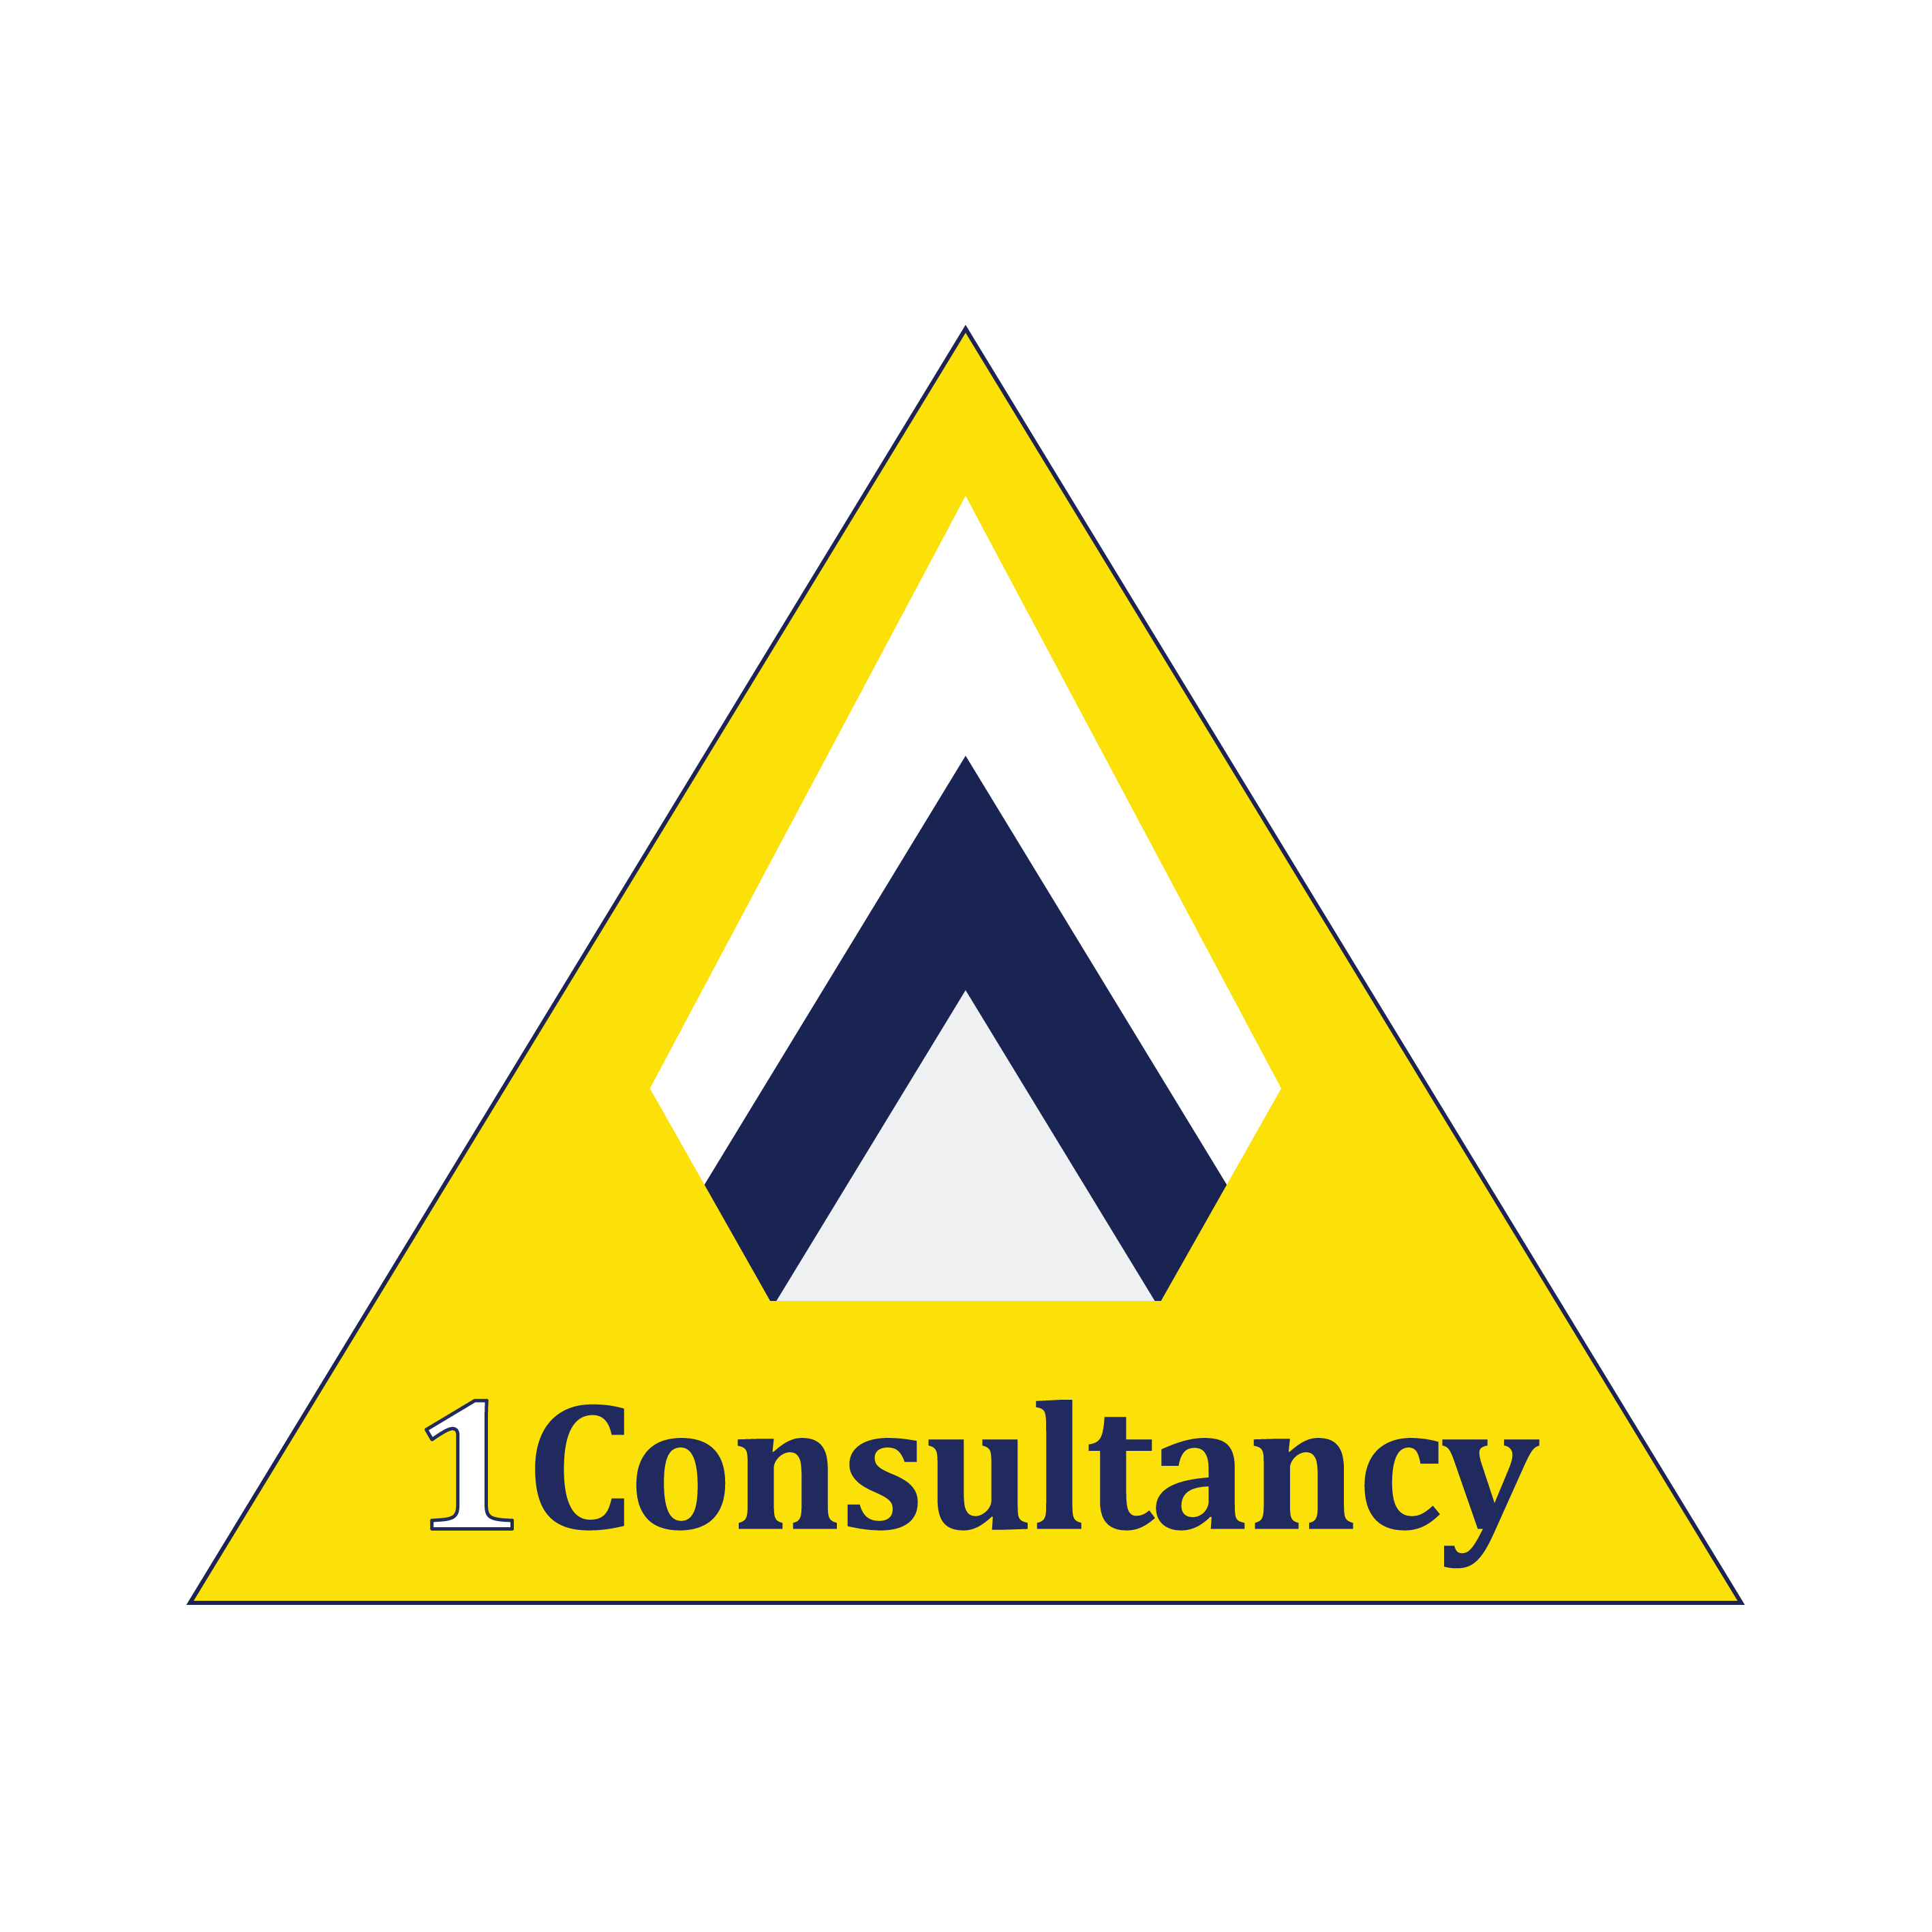 1 Consultancy